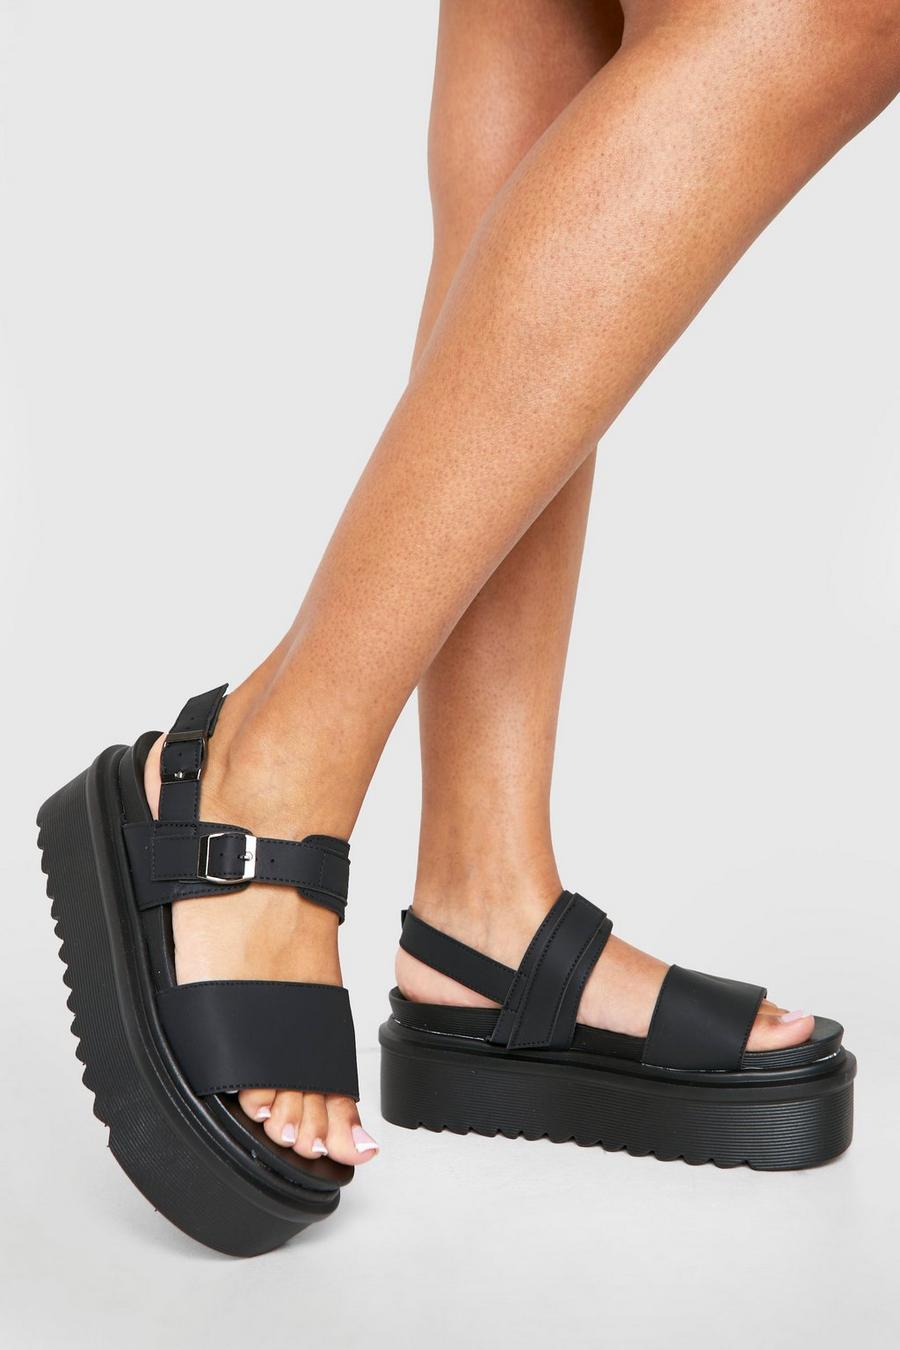 Super klobige Platform-Schuhe, Black